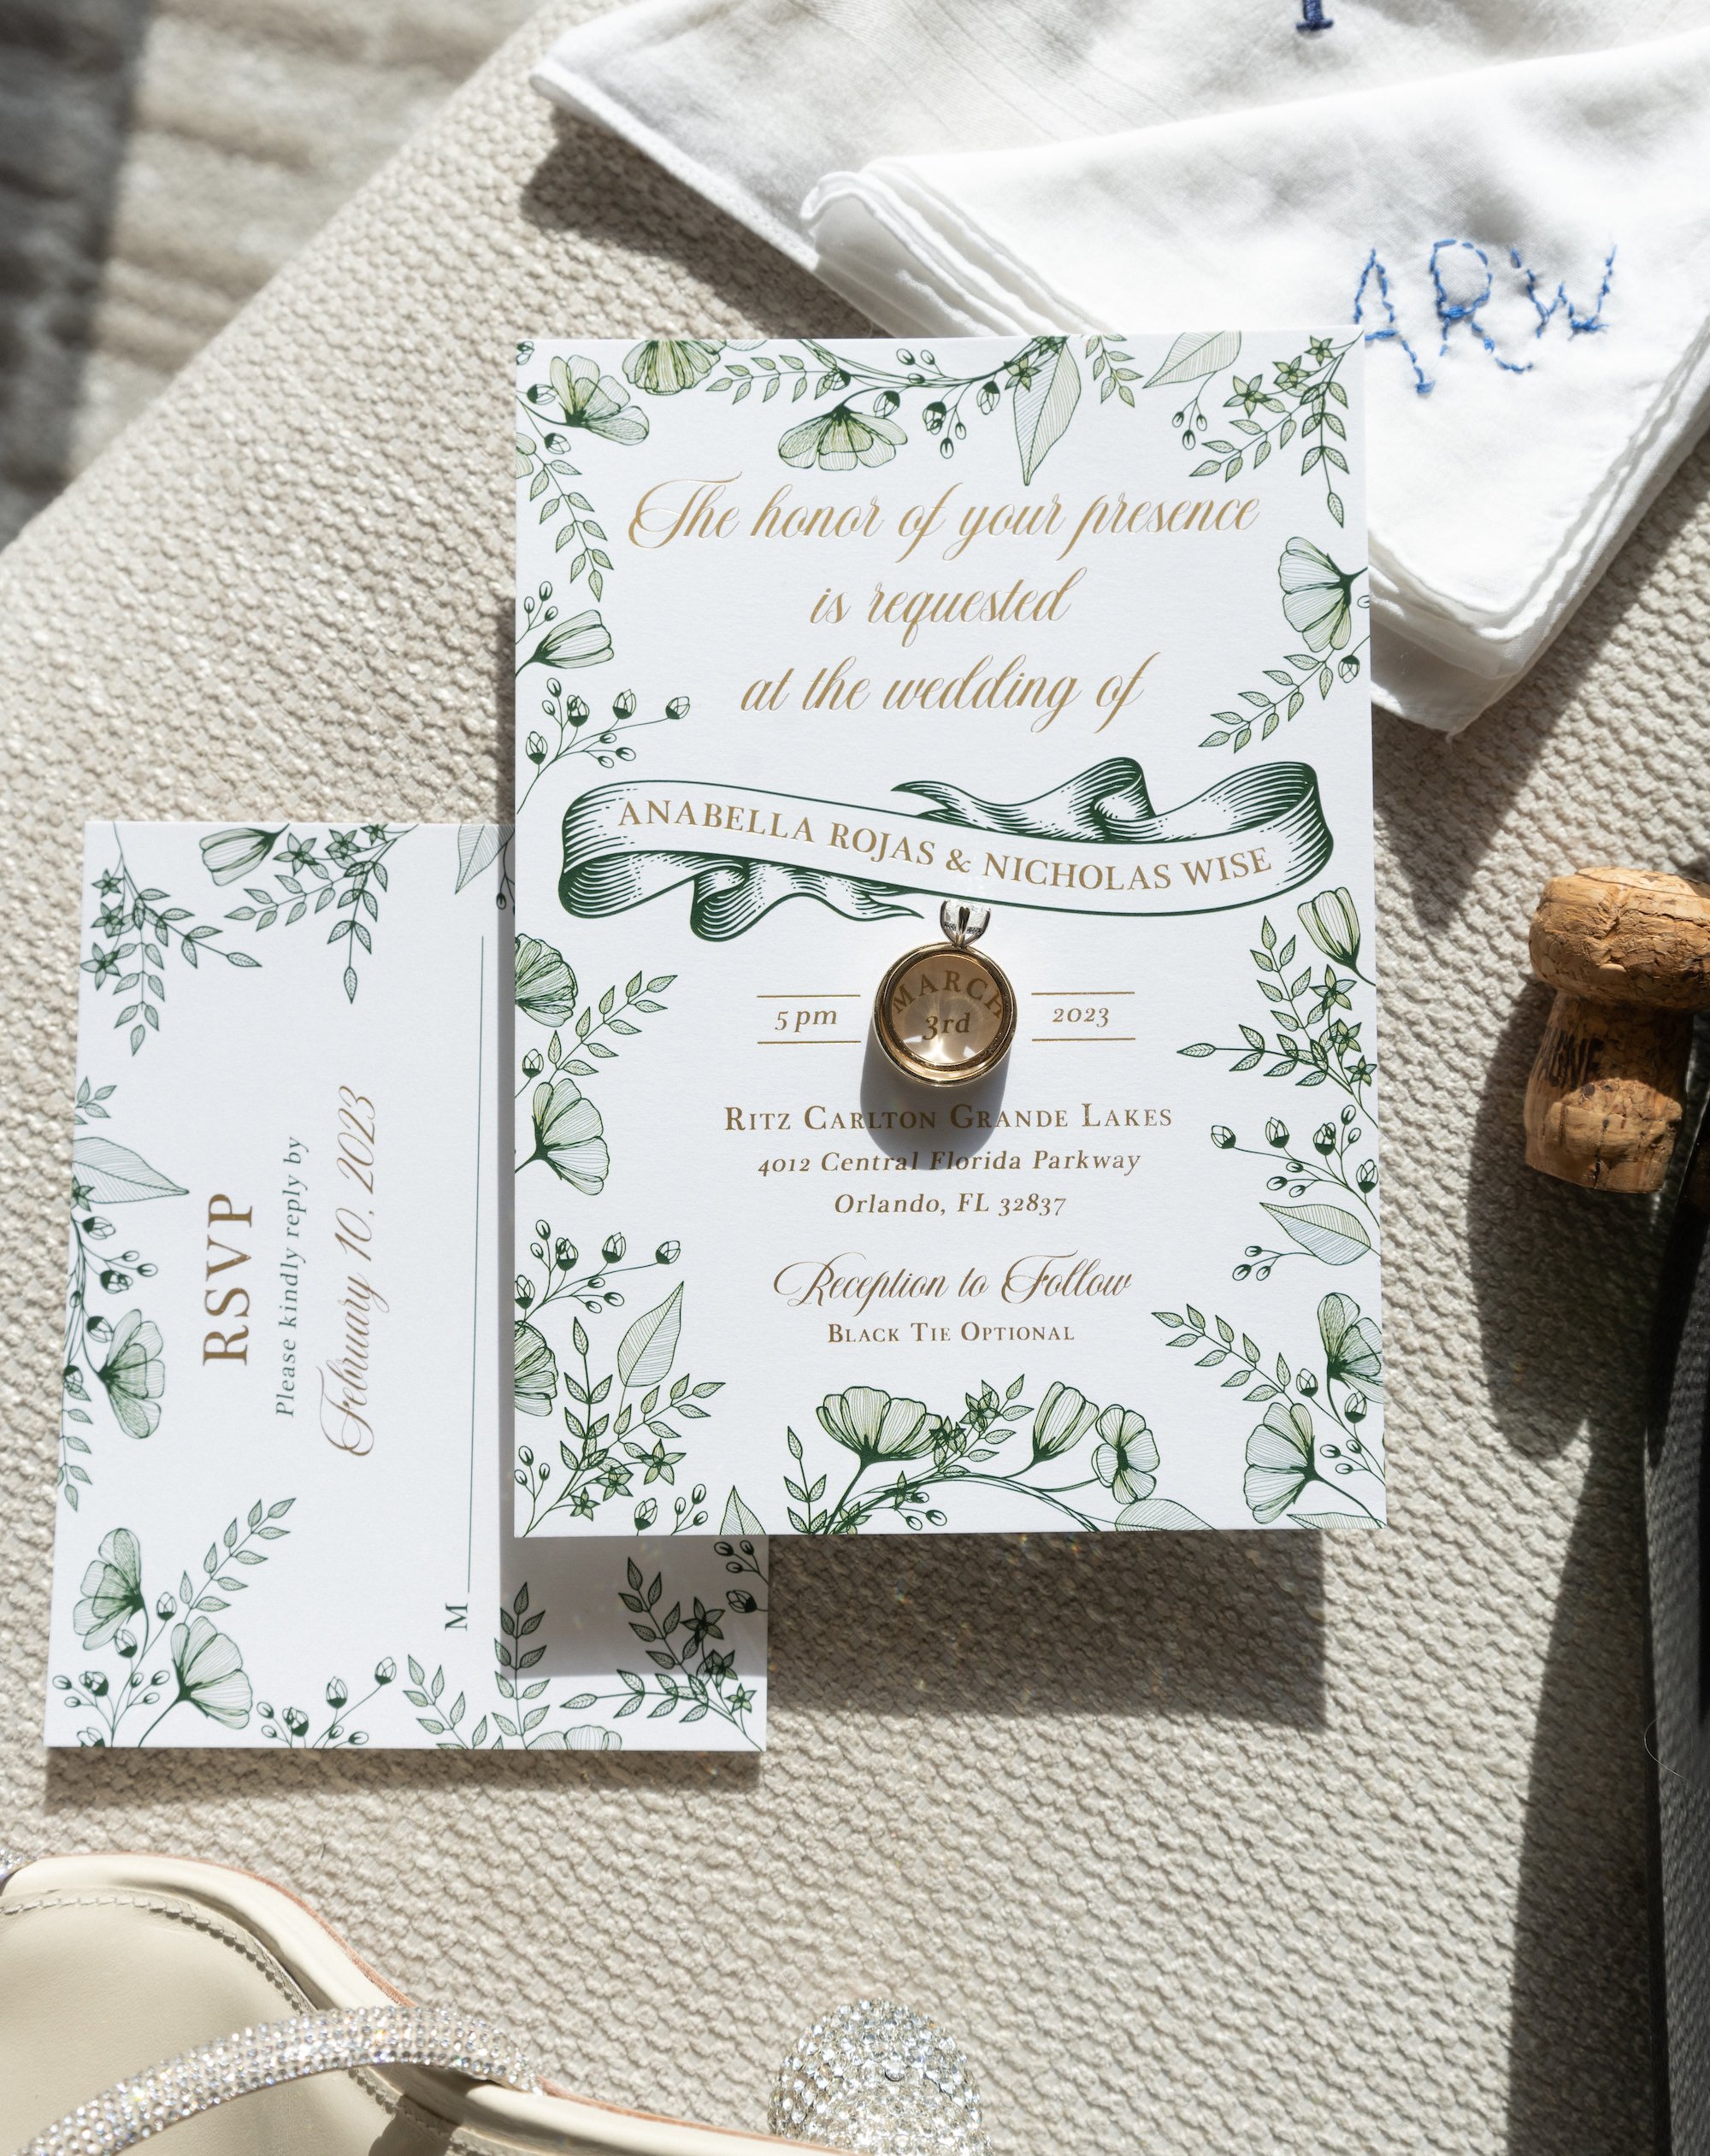 4Timeless White Courtyard Wedding | Ritz Carlton Orlando | Photographers Dewitt for Love Photography.jpg